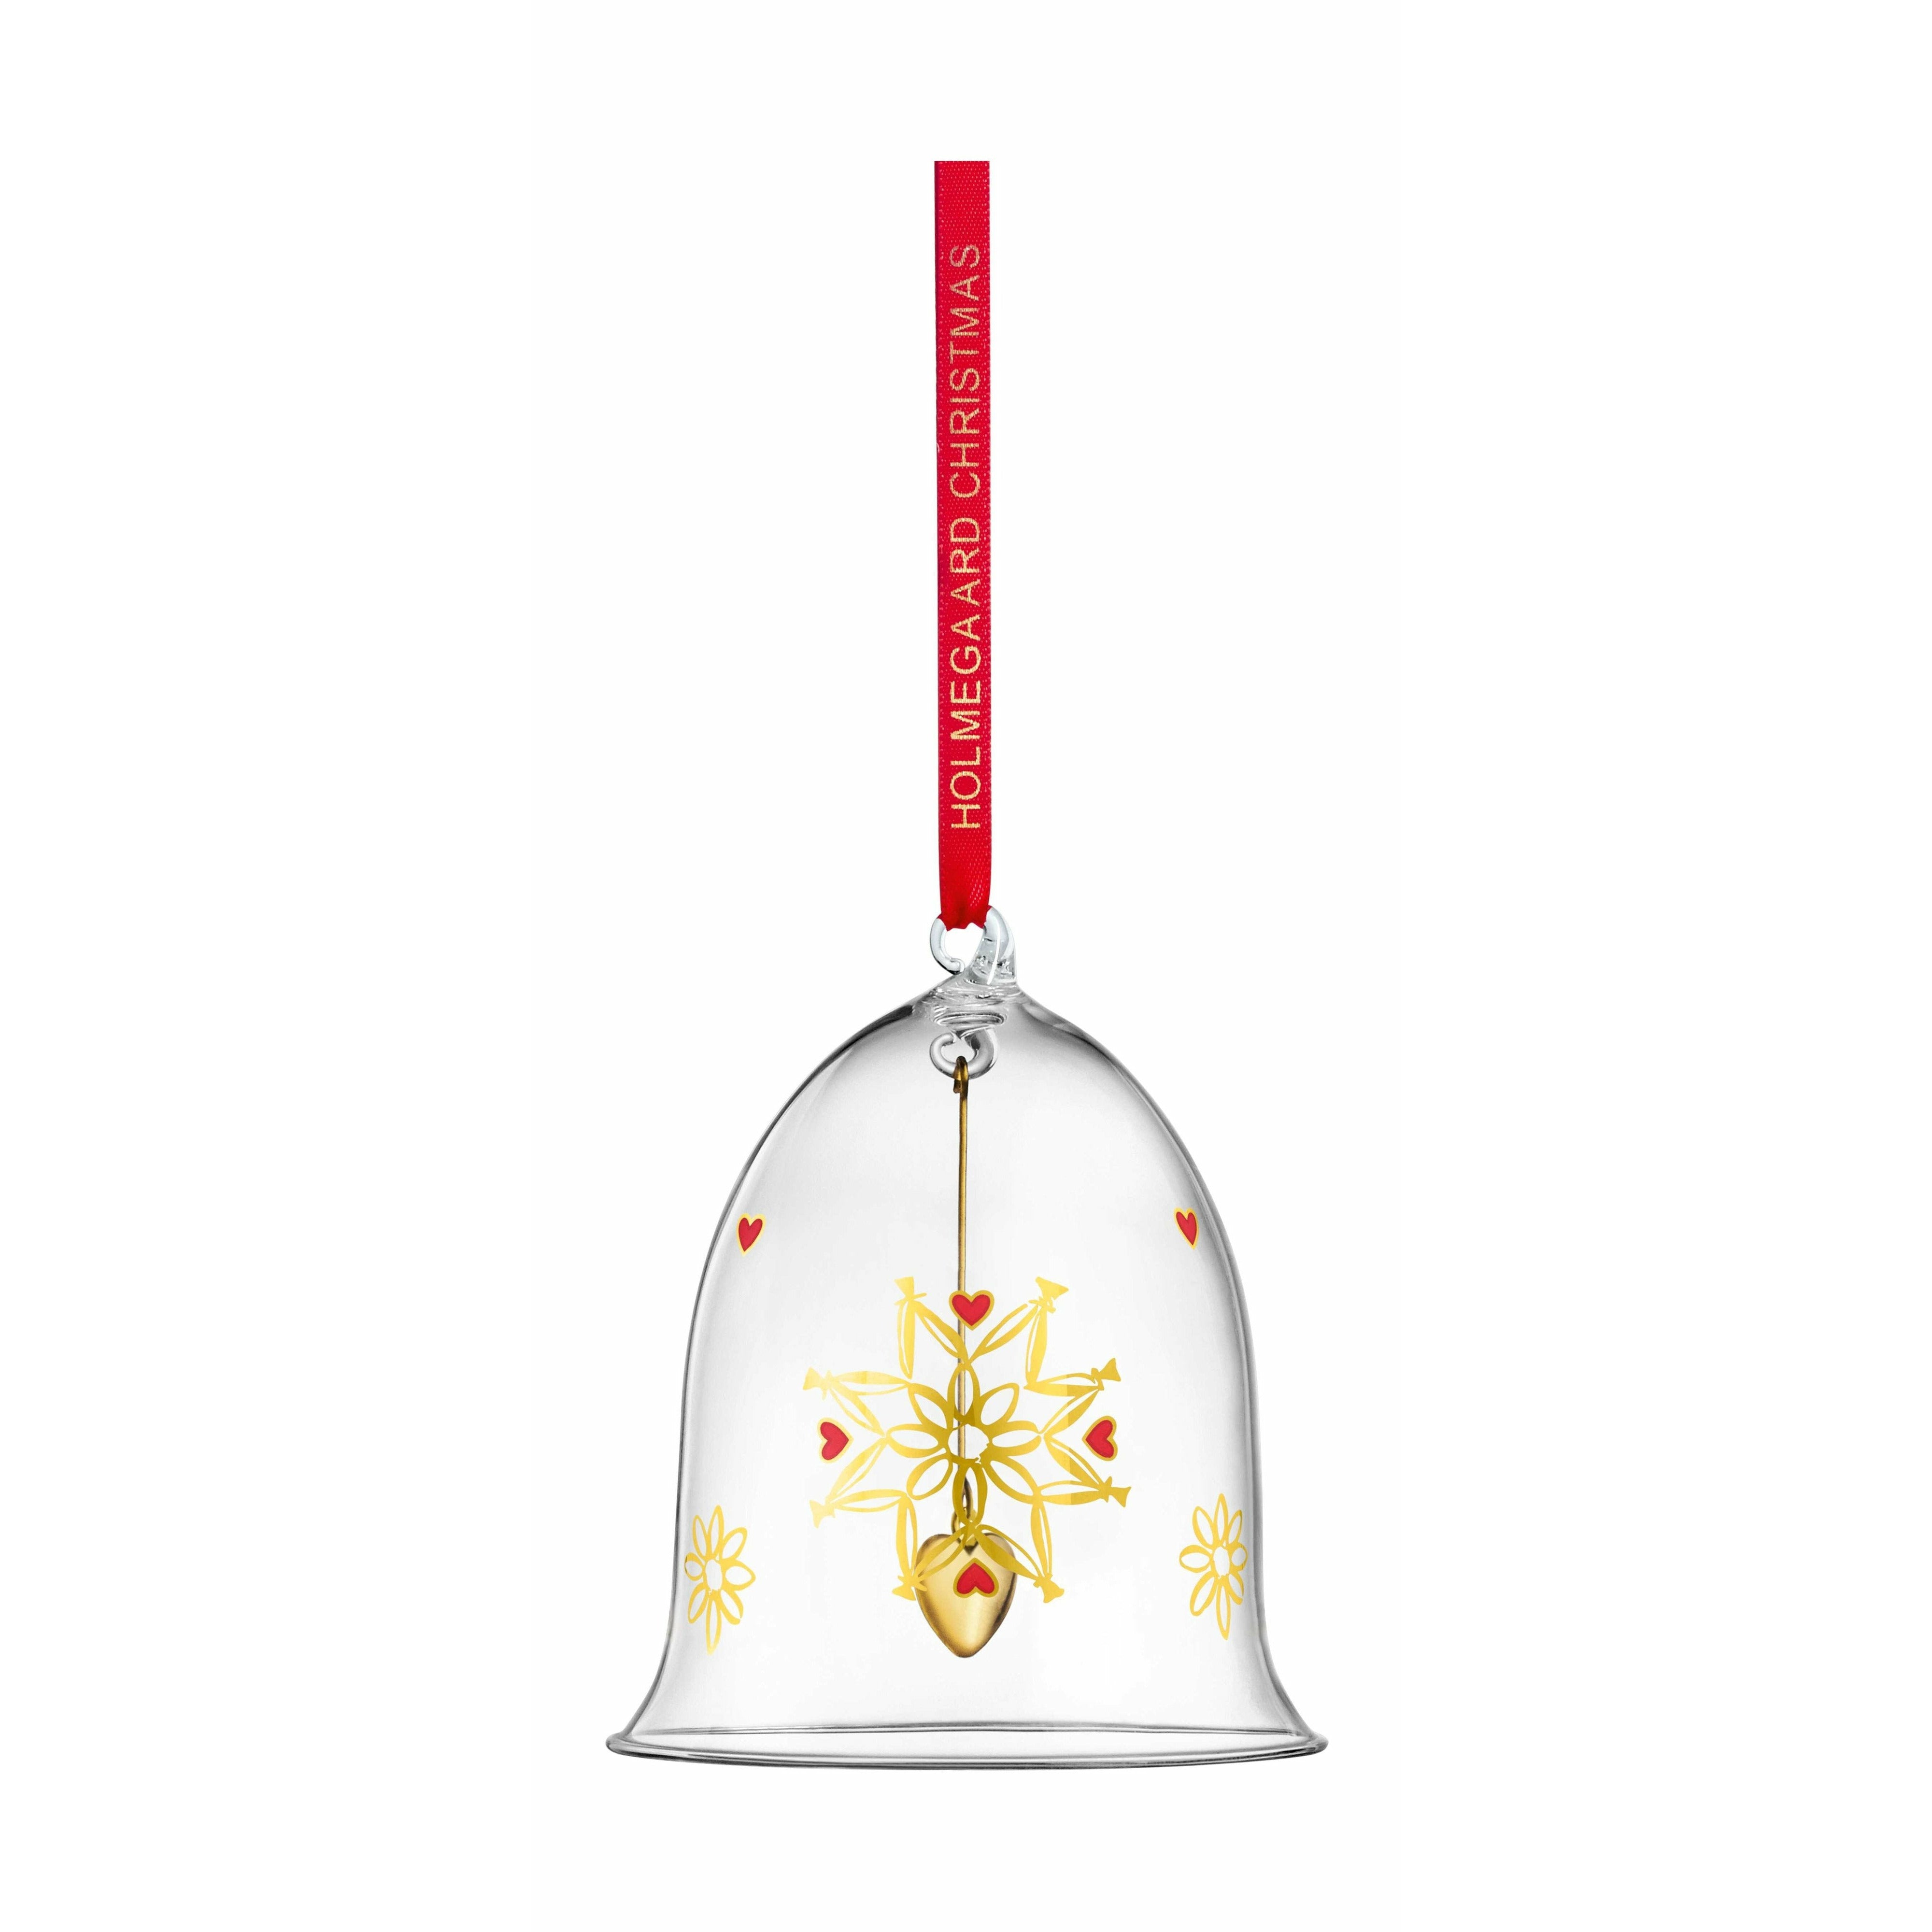 Holmegaard Ann Sofi Romme Christmas Bell, grande